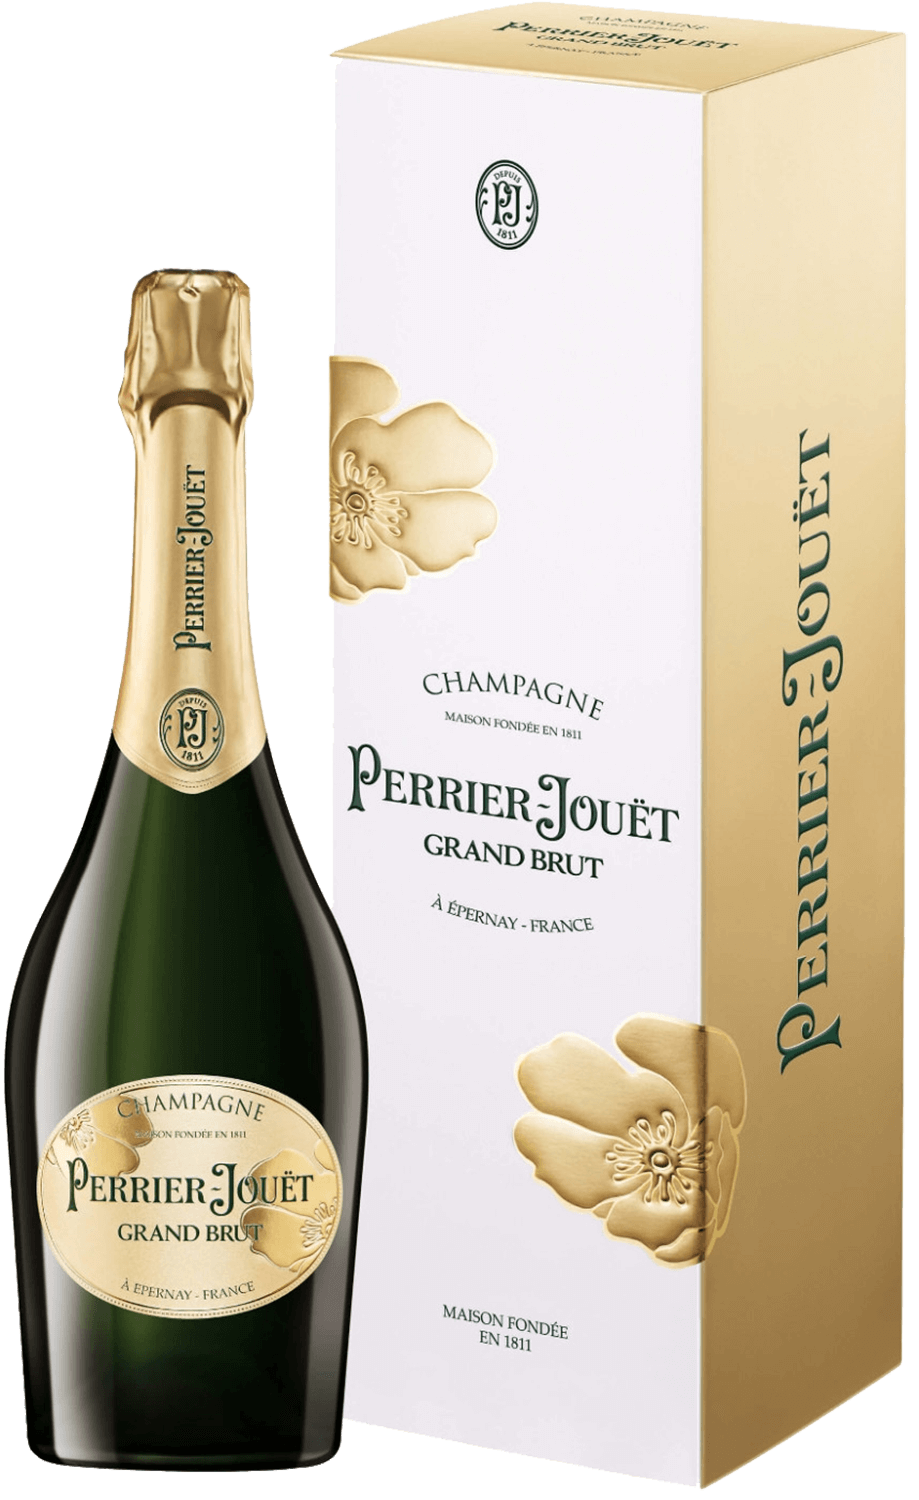 Perrier-Jouёt Grand Brut Champagne AOC (gift box) mailly grand cru brut reserve champagne aoc gift box